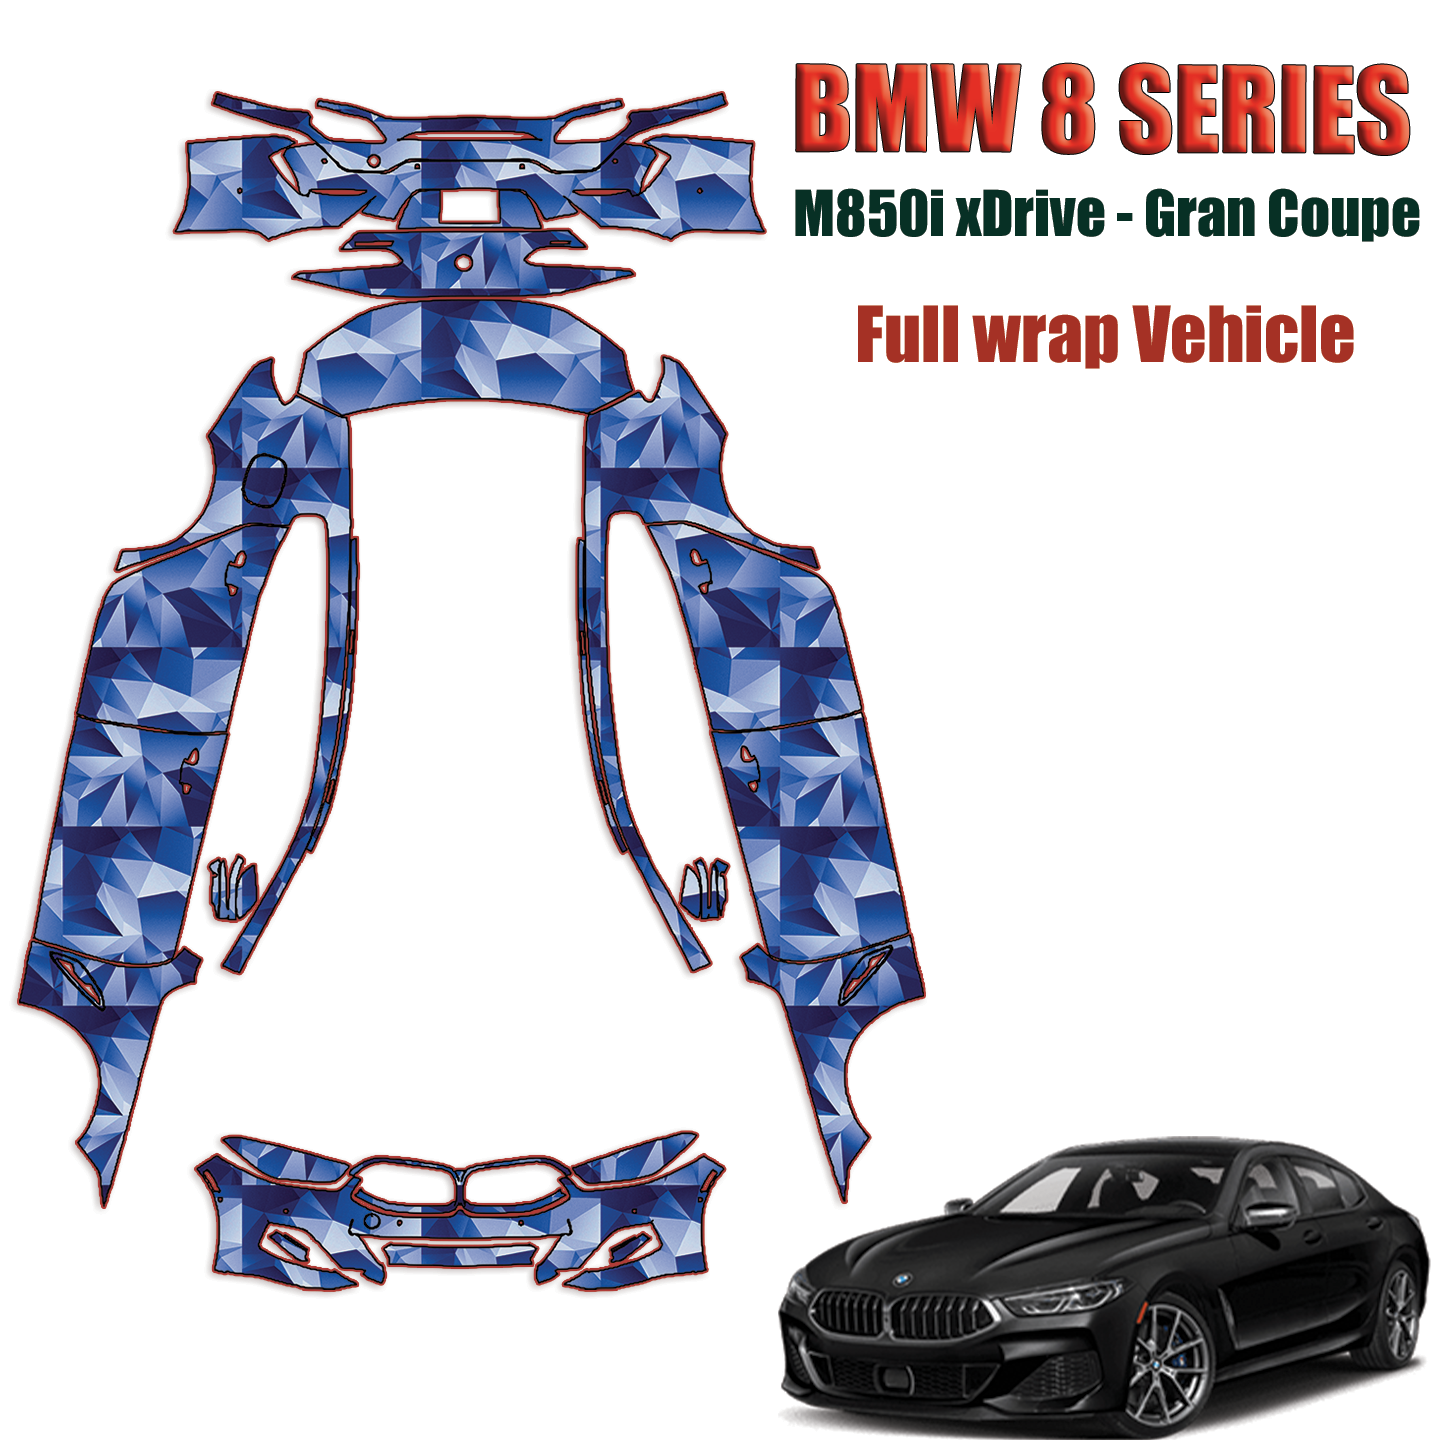  2020-2023 BMW 8 Series Gran Coupe M850i xDrive Precut Paint Protection Kit – Full Wrap Vehicle